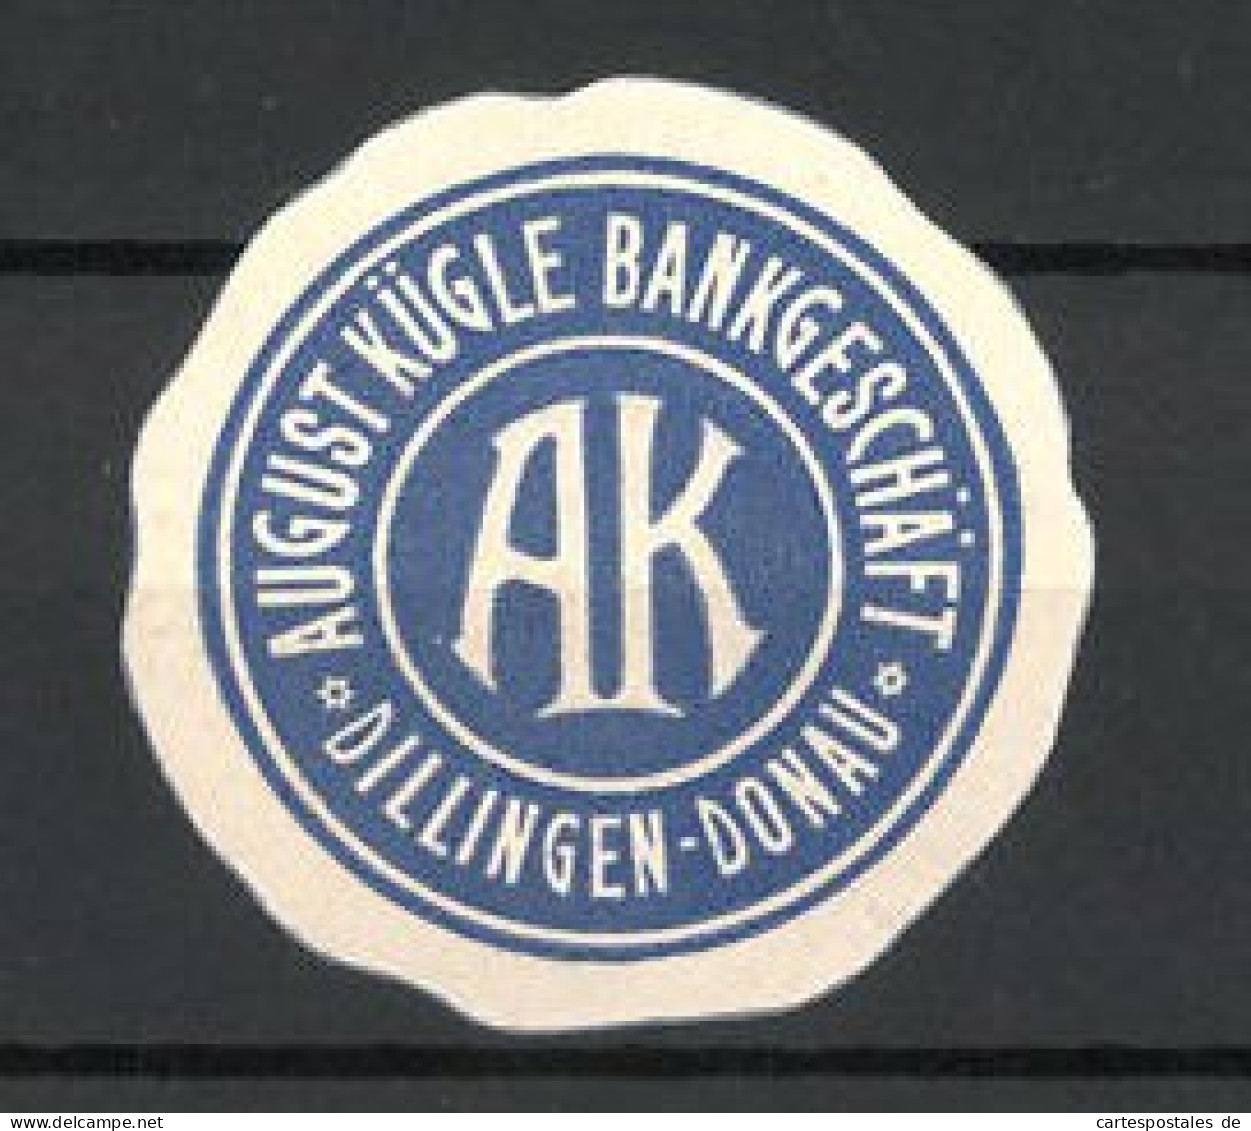 Reklamemarke August Kügle Bankgeschäft, Dillingen / Donau, Firmenlogo  - Vignetten (Erinnophilie)